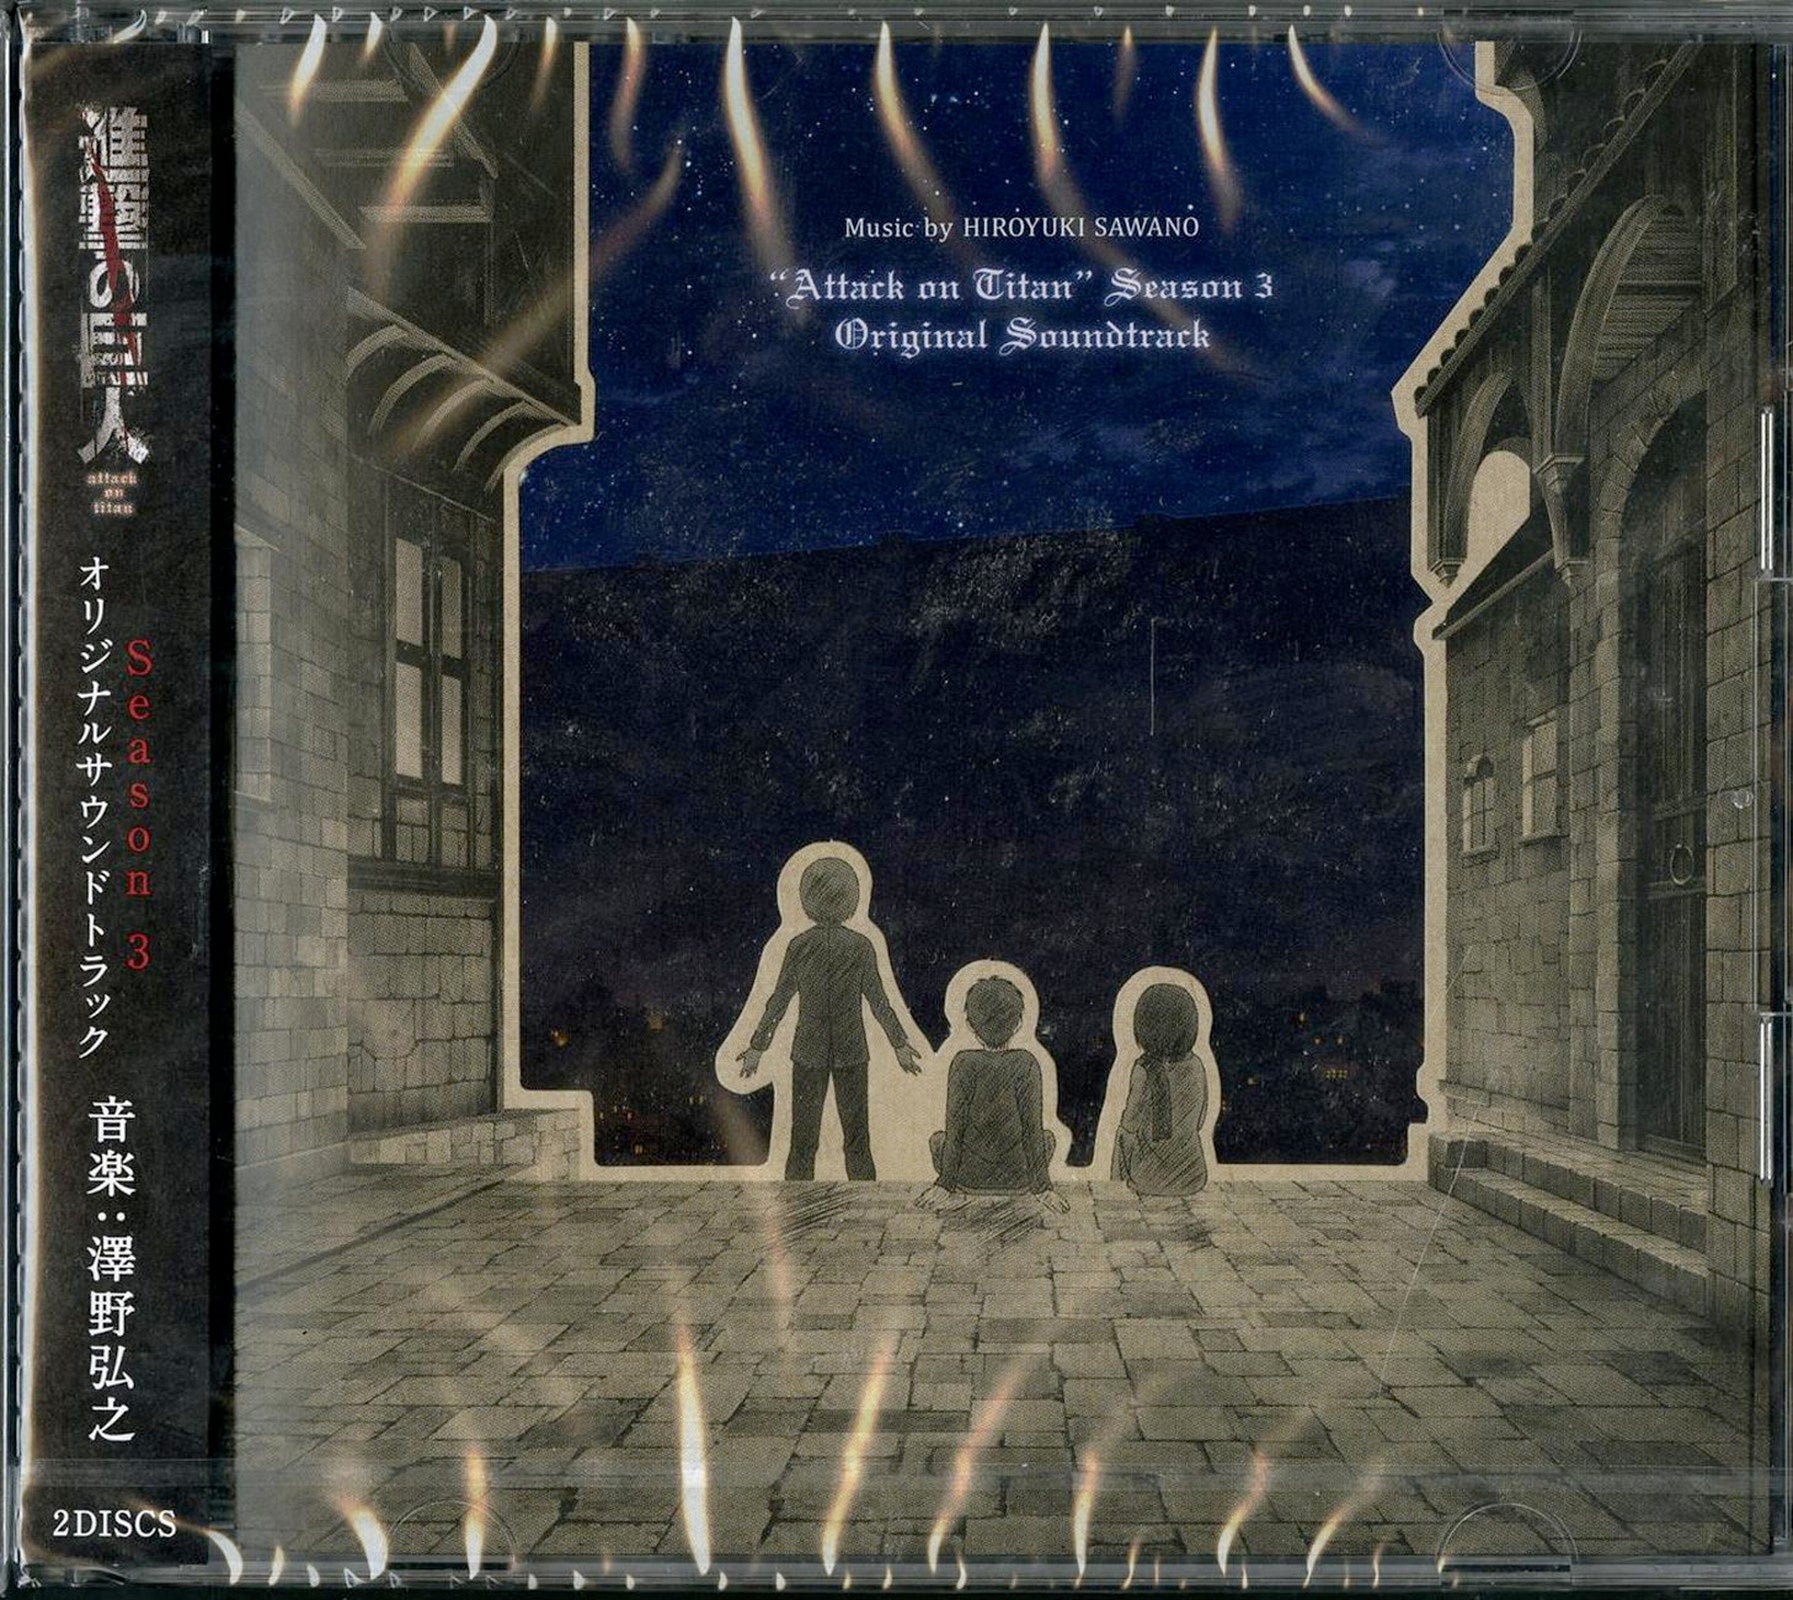 Attack on Titan Season 3 Original Soundtrack - Album by Hiroyuki